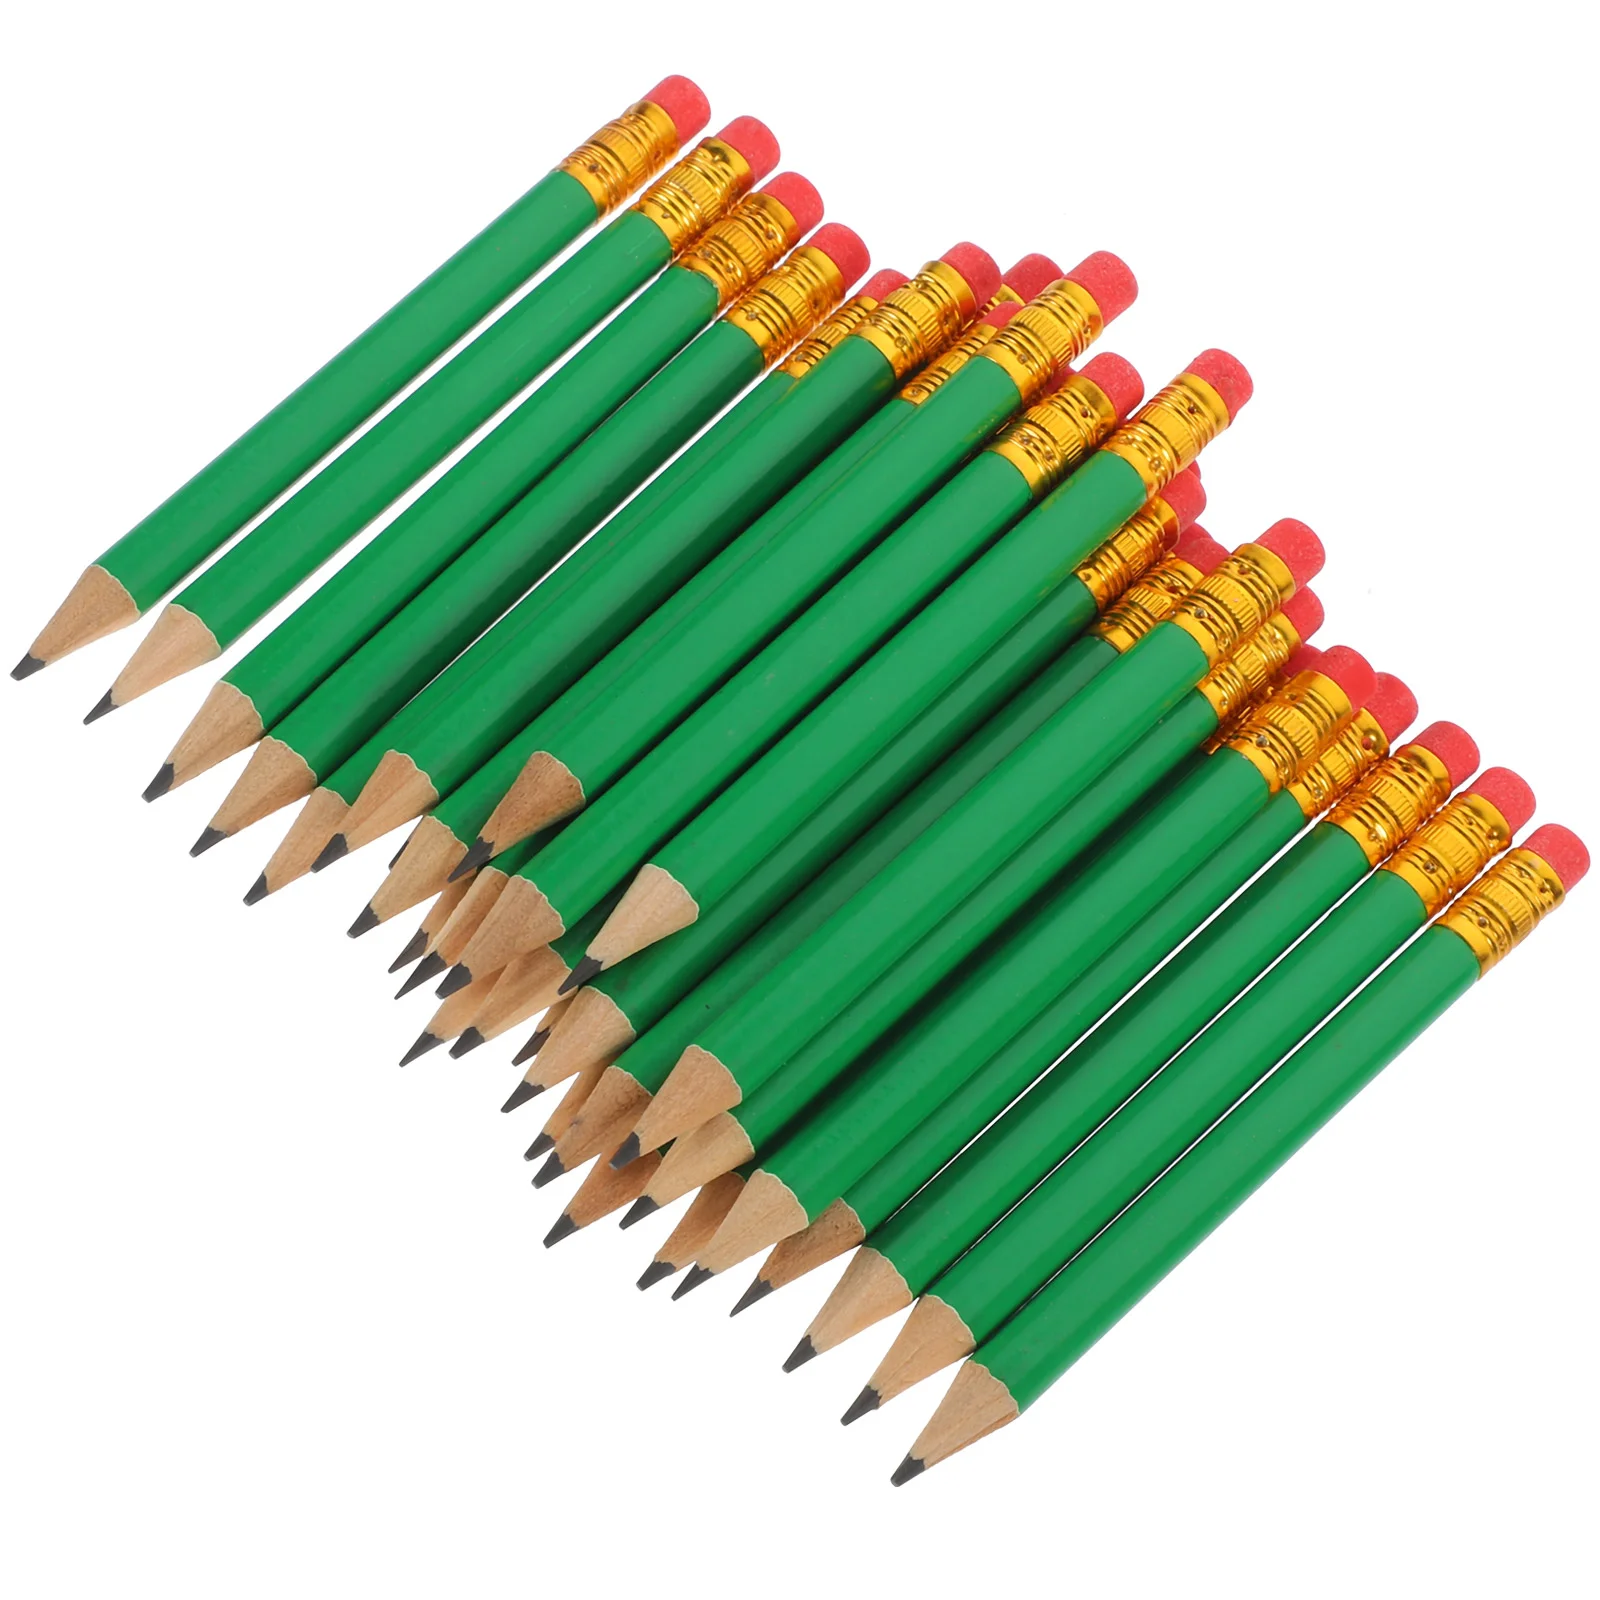 

72pcs Small Pencils Students Portable Writing Pencils Drawing Pencils Wood Pencils Drawing HB Pencils